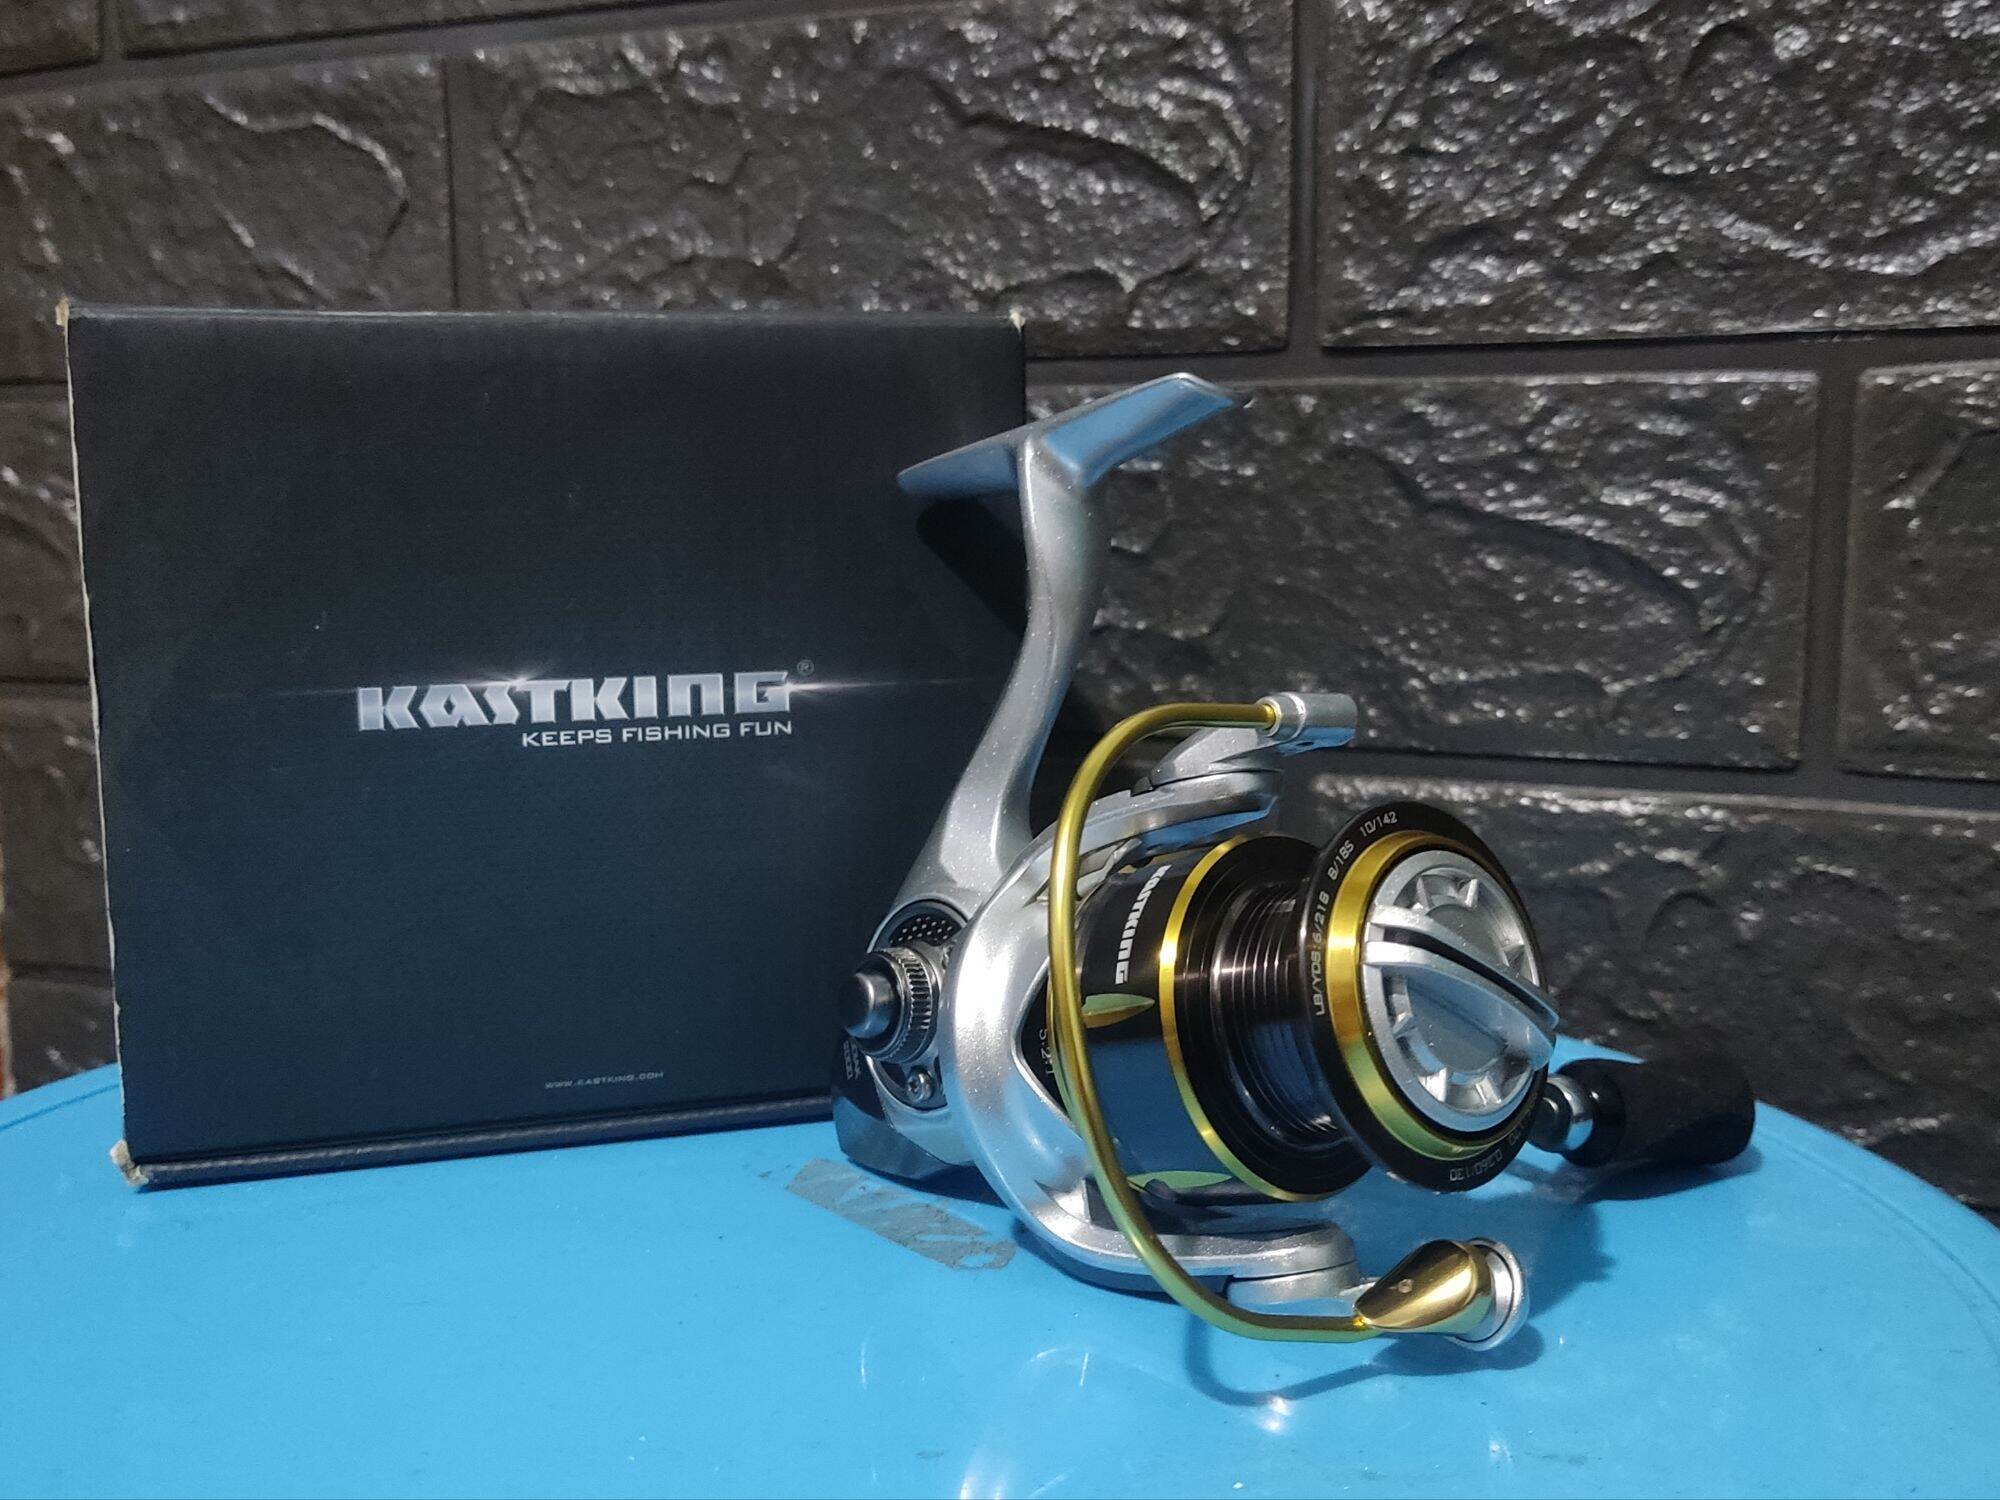 KastKing Kodiak Full Metal Body Design 11BB Fishing Reel 5.2:1 Gear Ratio